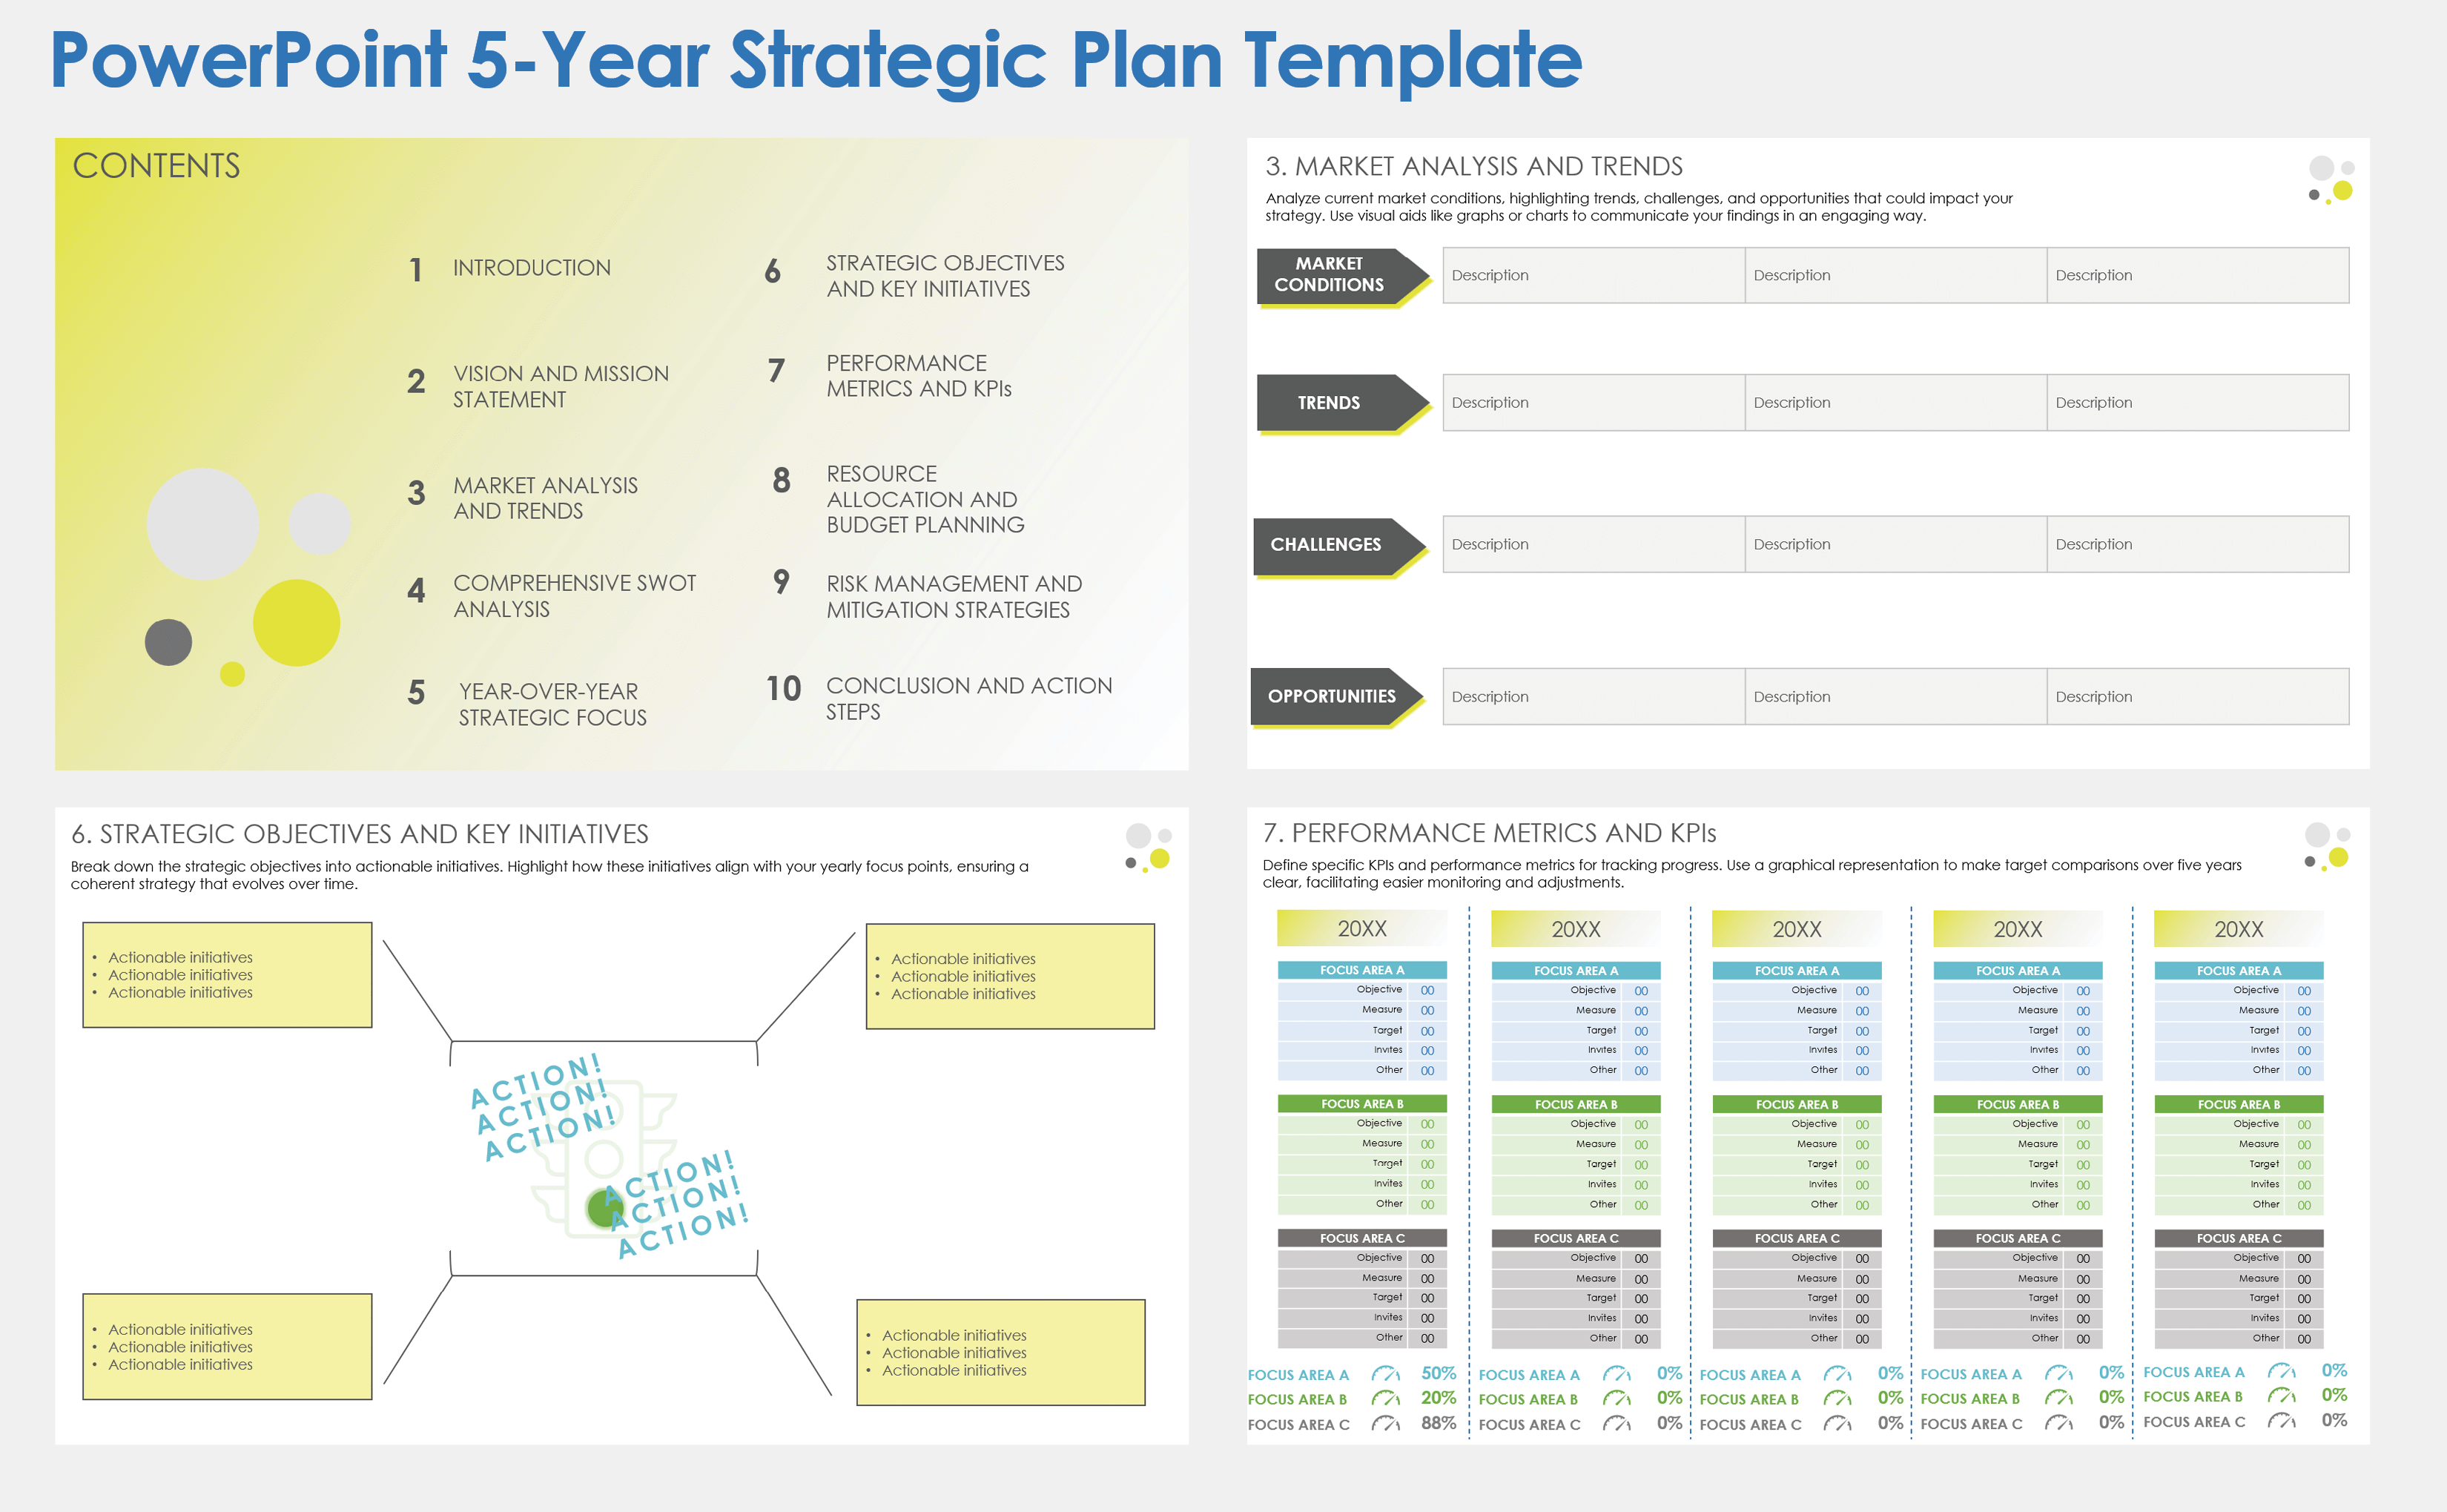 PowerPoint 5-Year Strategic Plan Template